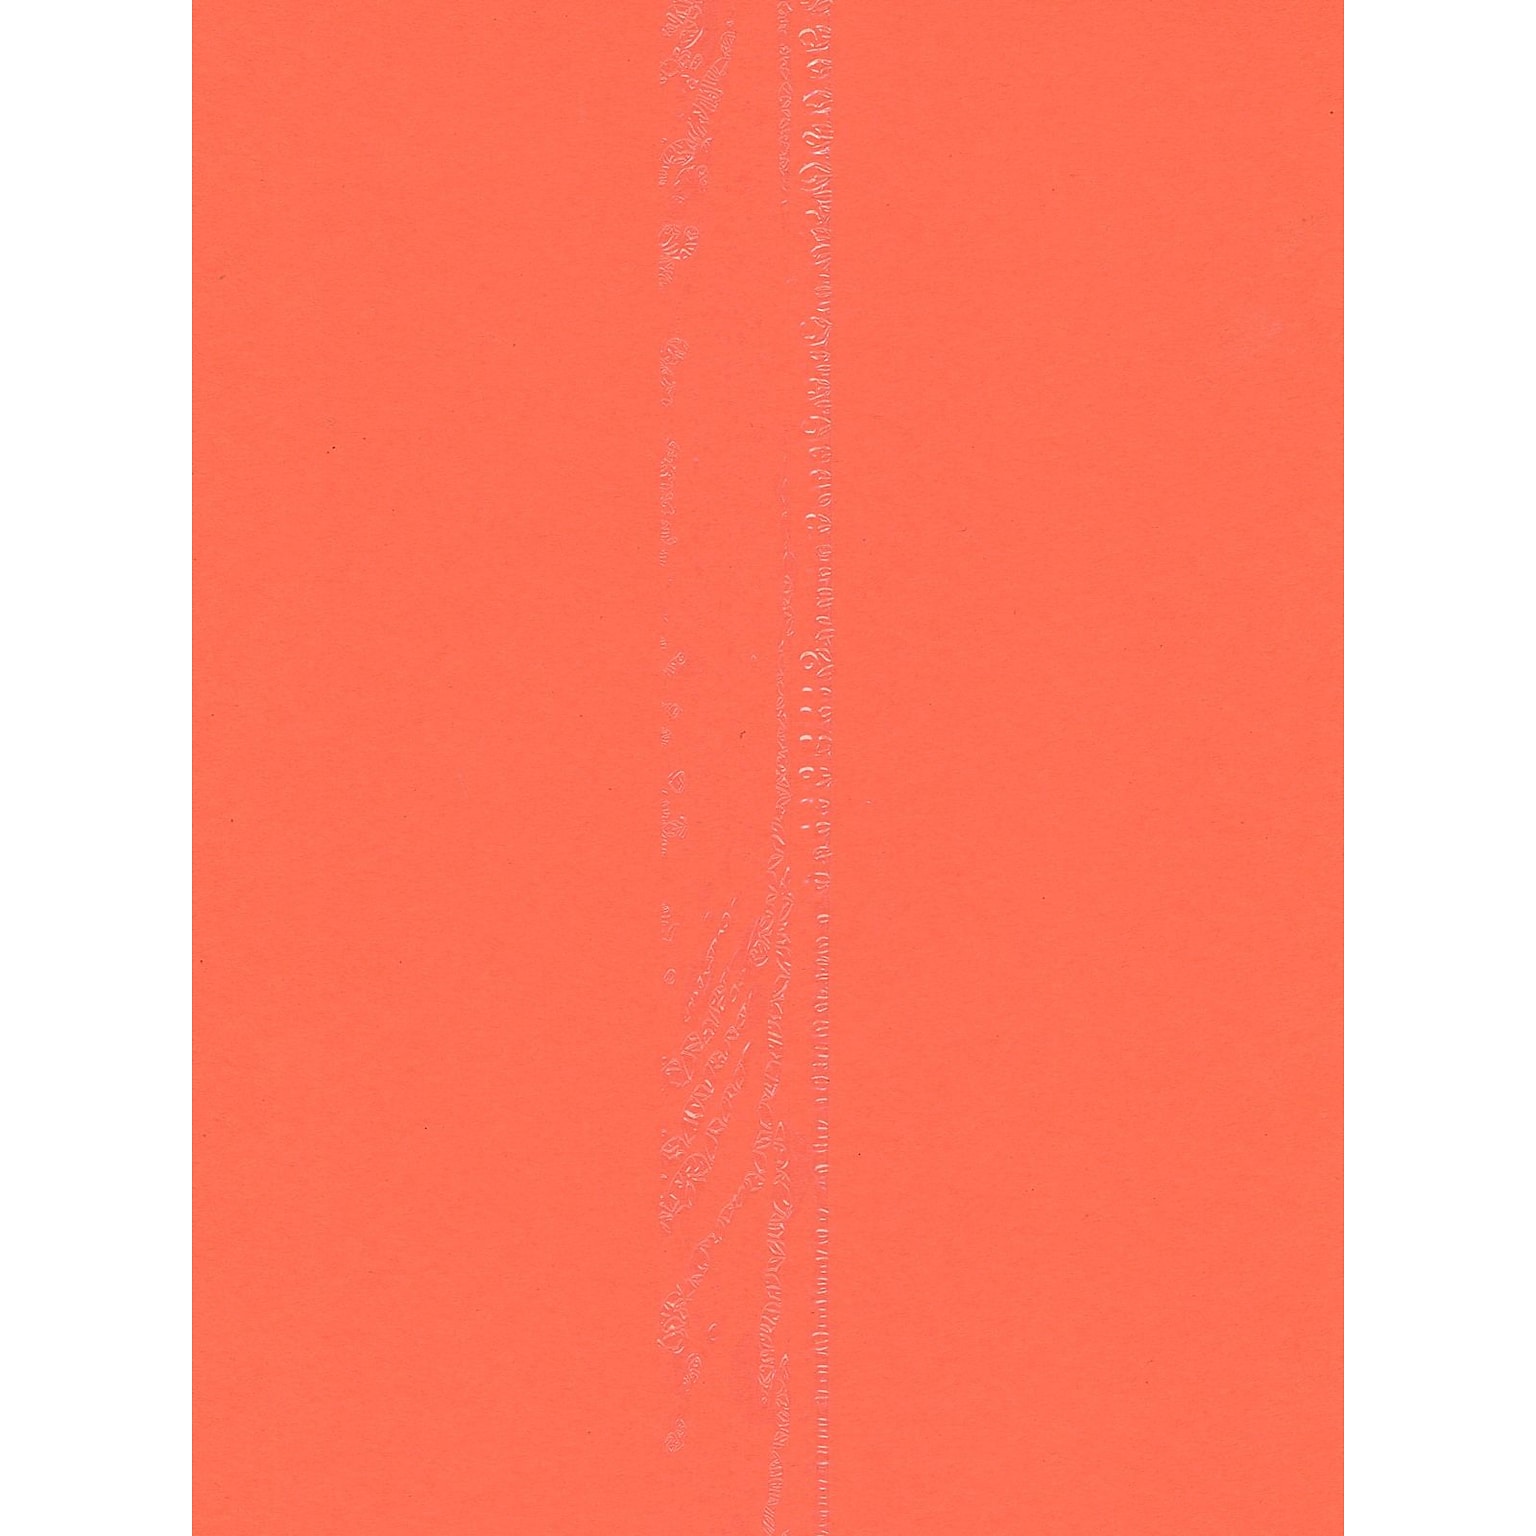 Pacon 12 x 18 Construction Paper, Orange, 50 Sheets/Pack, 5/Pack (17126-PK5)